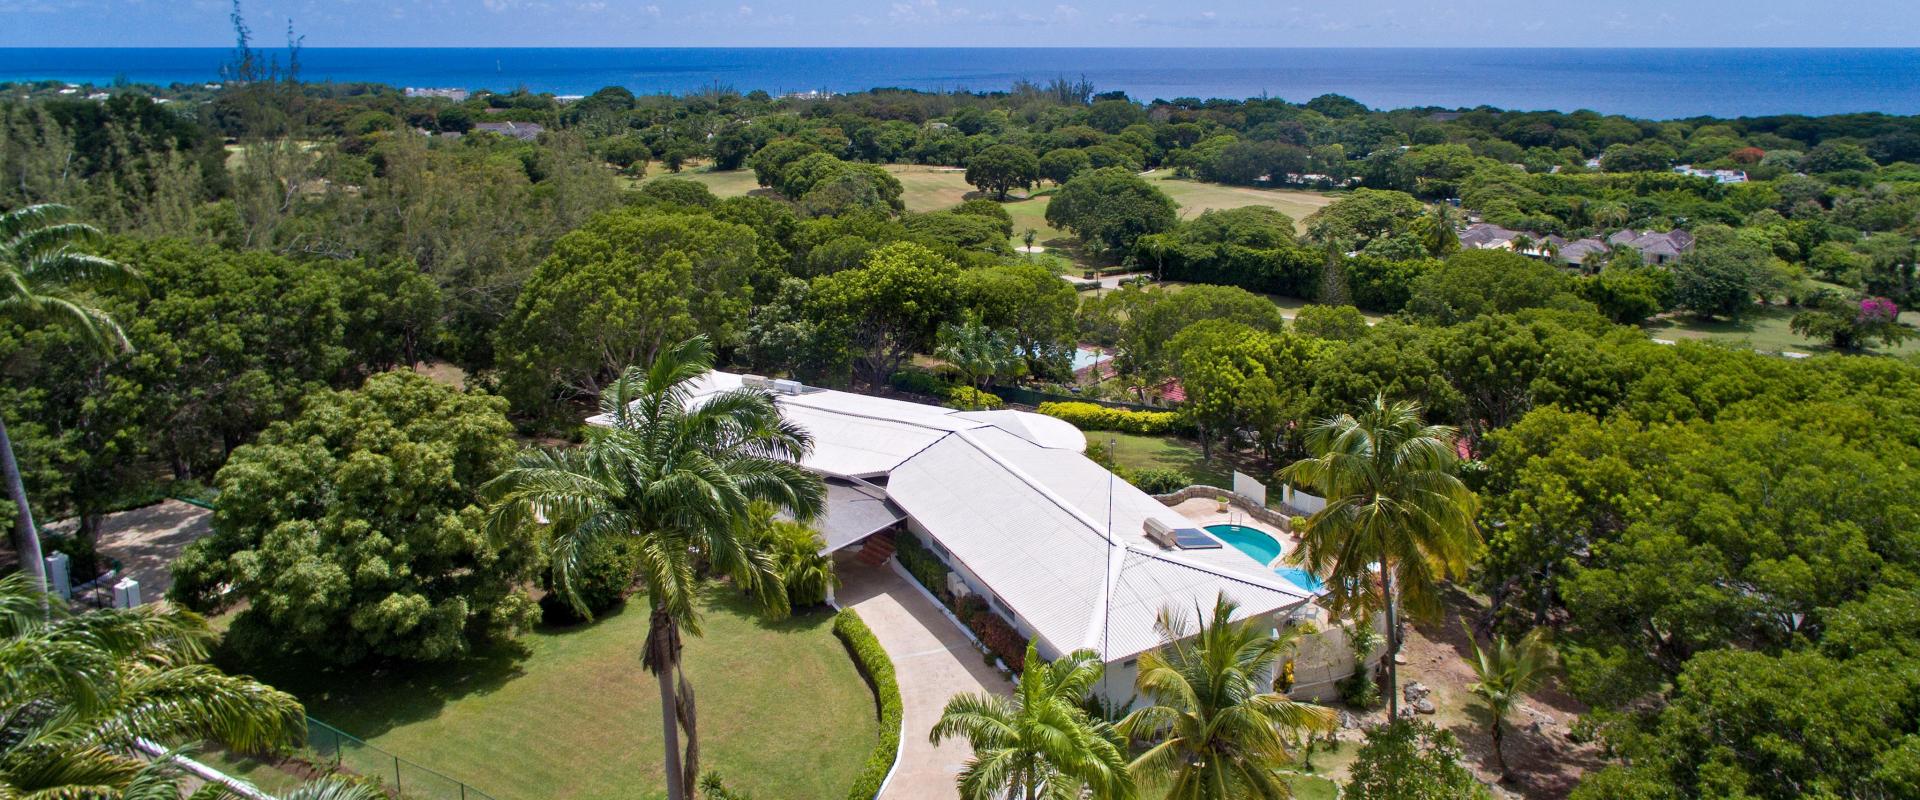 Sandy Lane Holiday Villa Barbados Halle Rose Aerial Shot of Driveway and Gardens